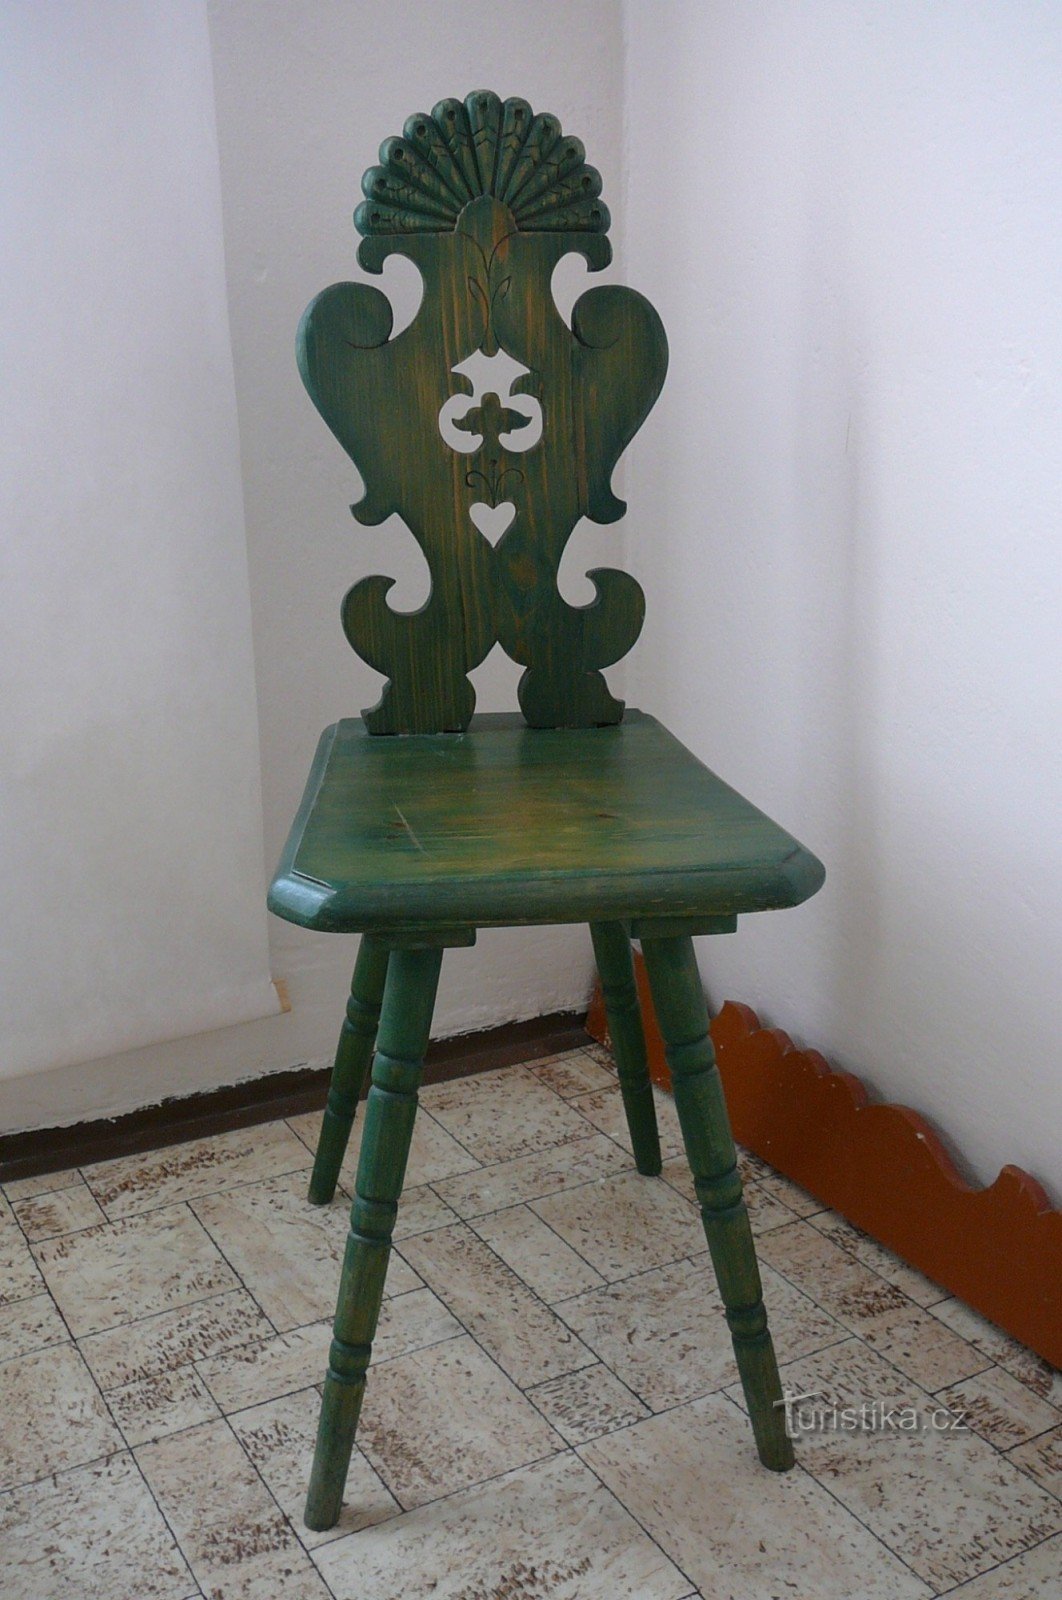 Restored chair in original color